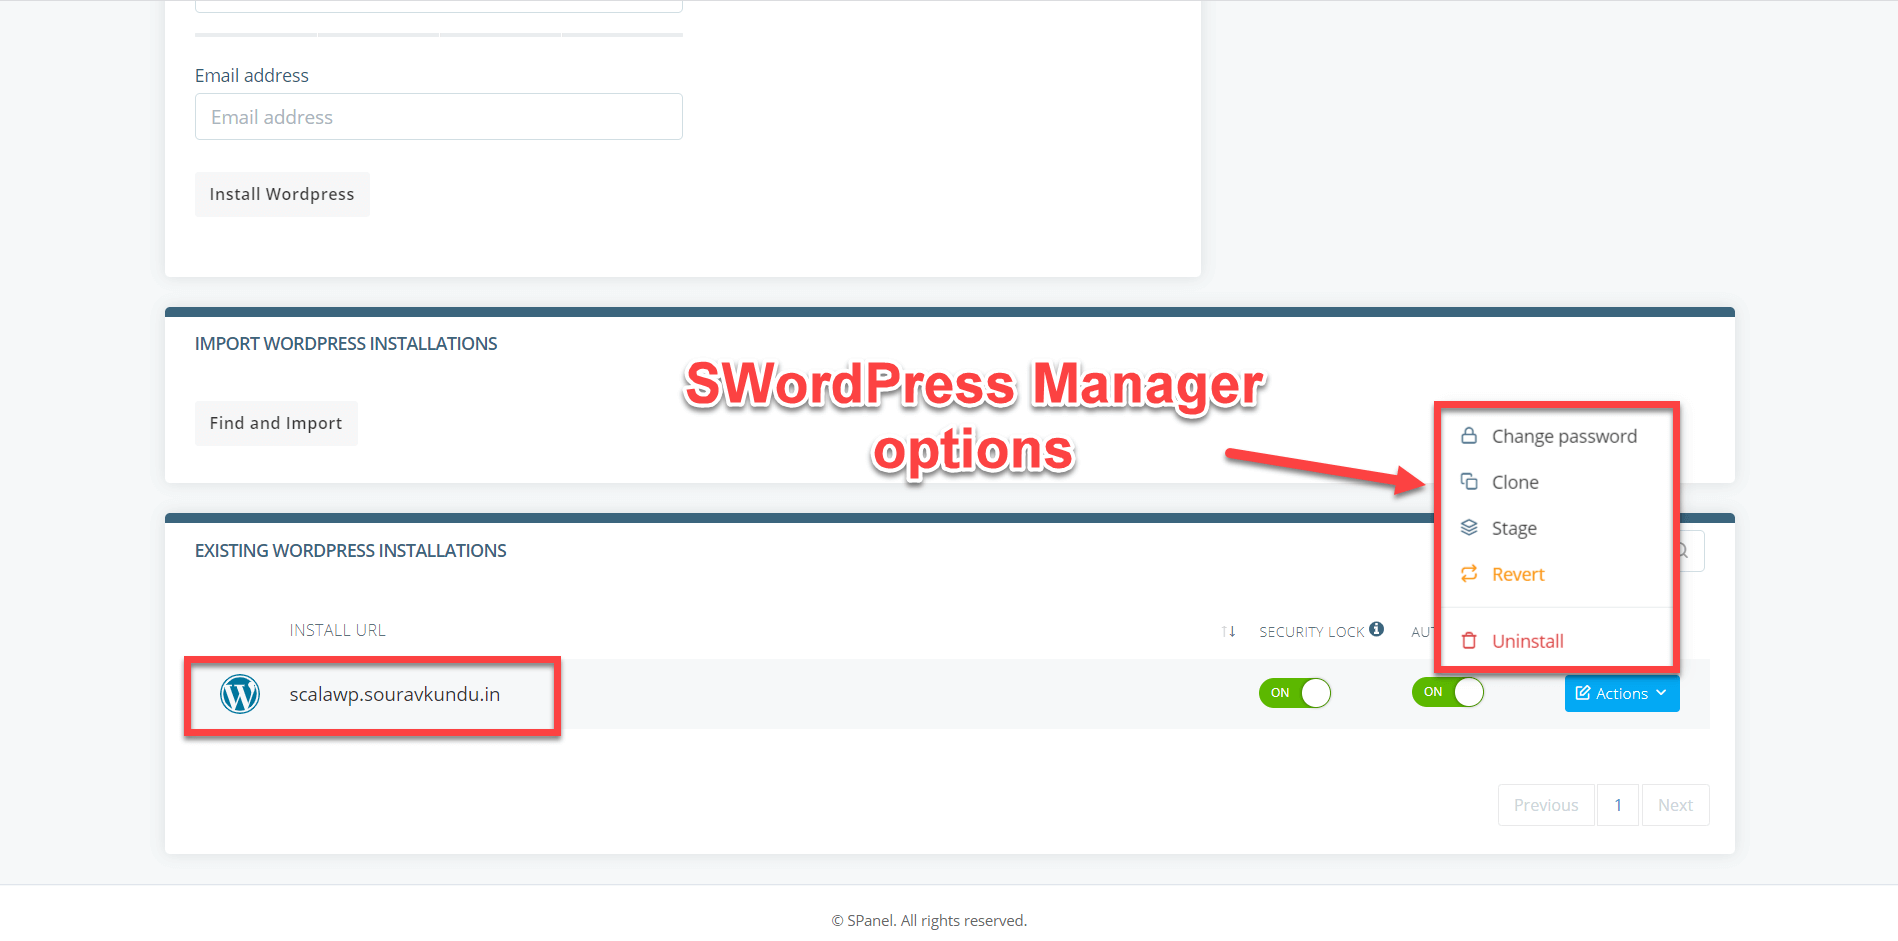 scala swordpress manager options